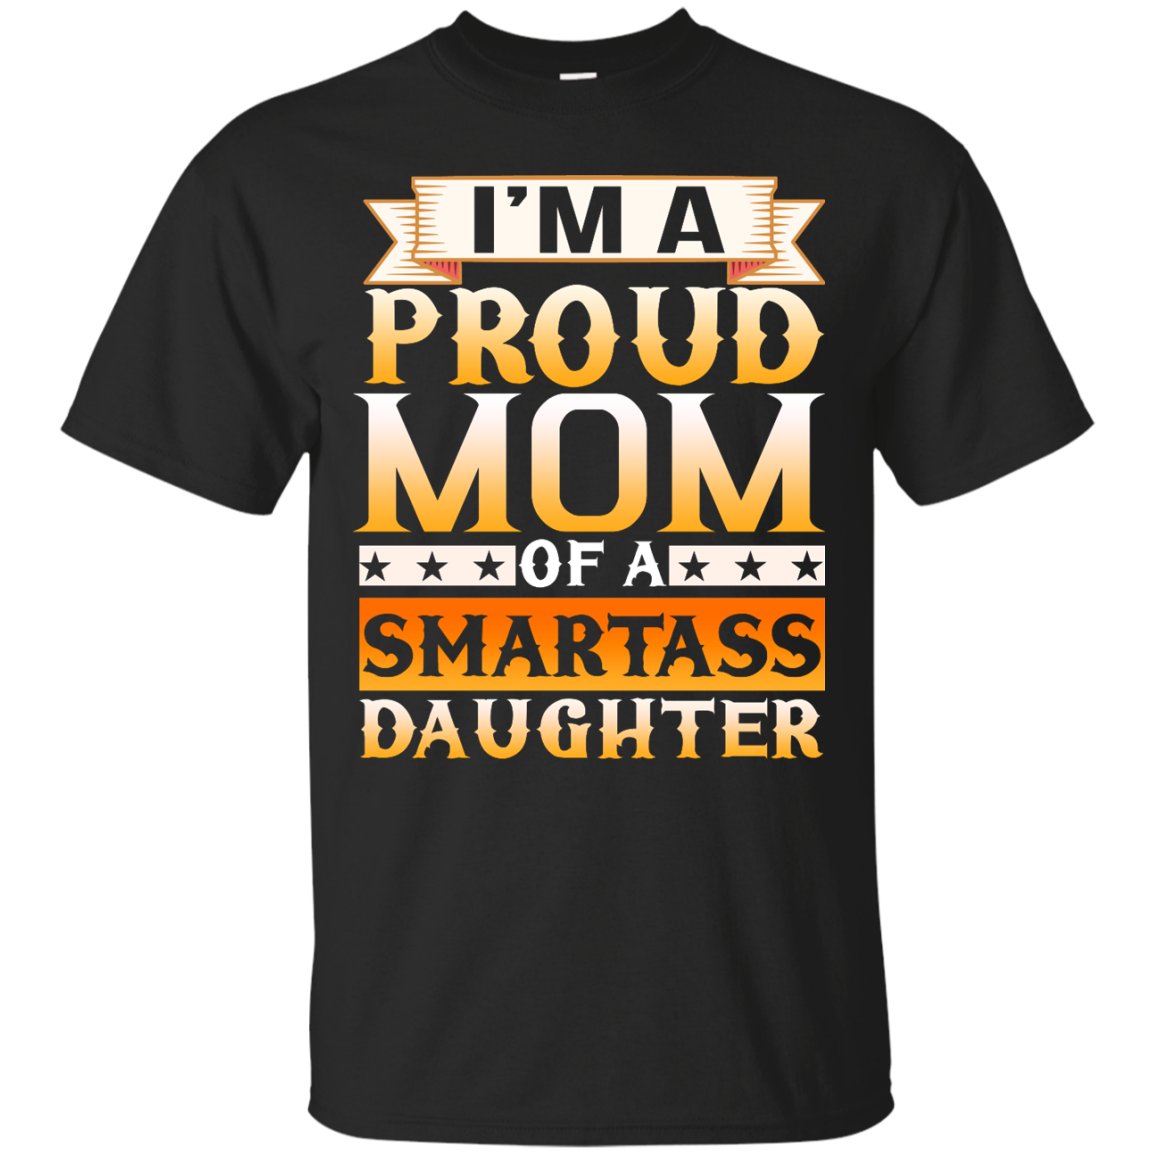 I'm A Proud Mom Of A Smartass Daughter shirt